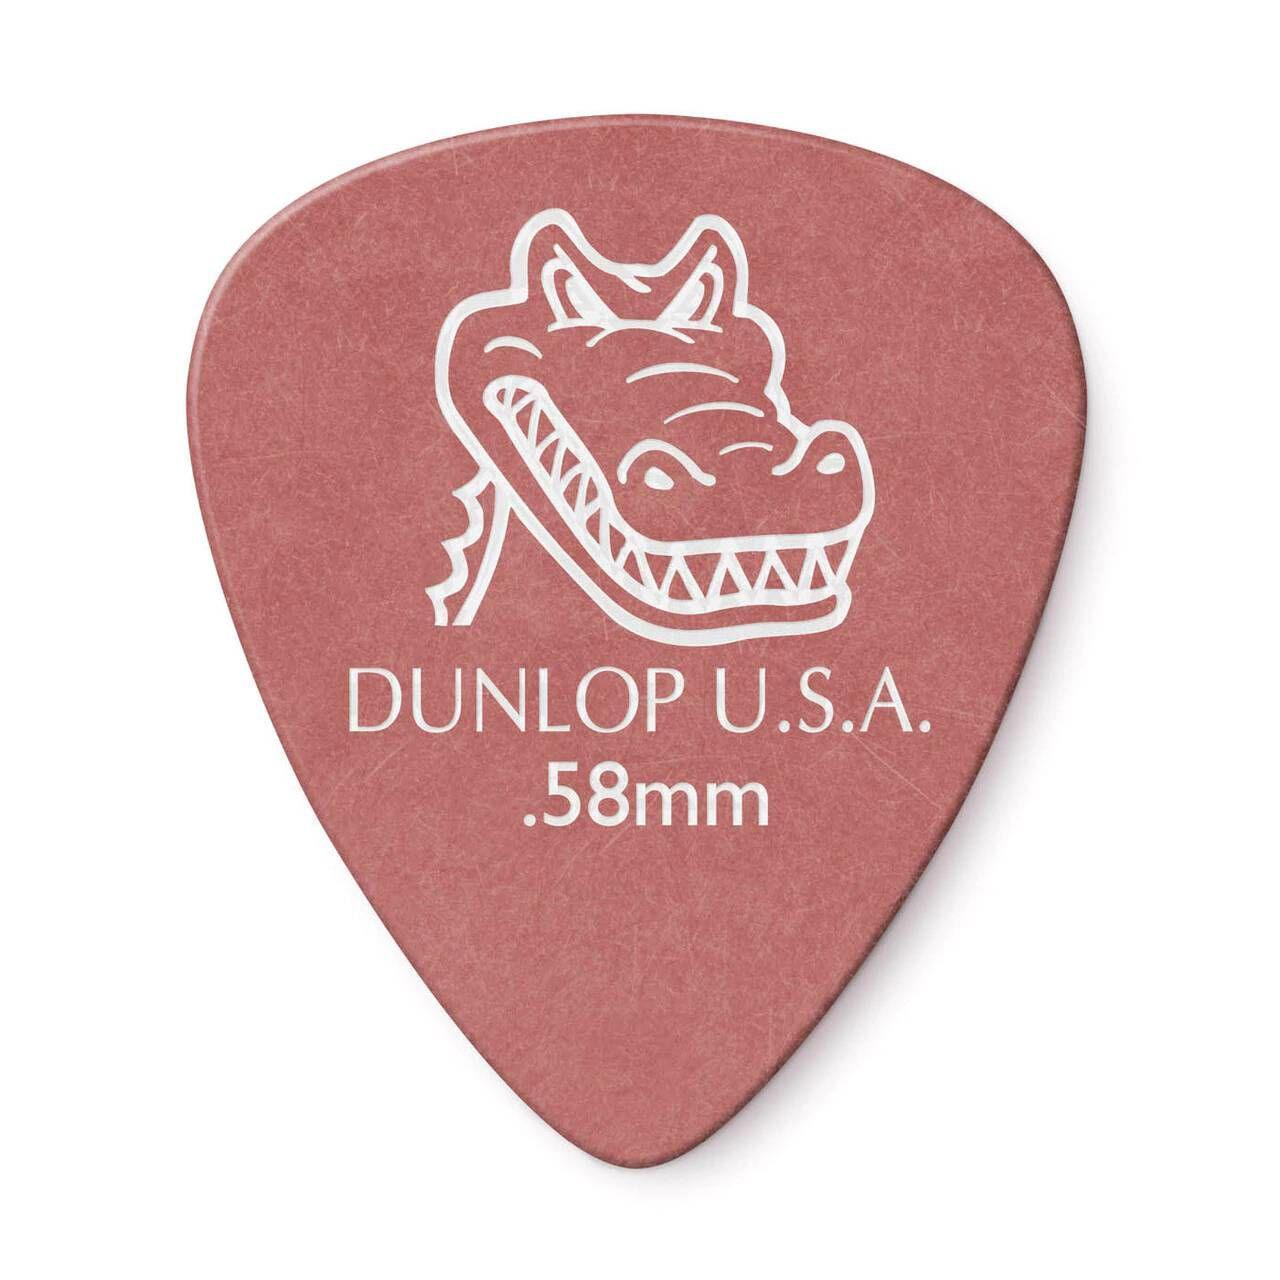 2.0mm Gator Pick Player Pack - Guitars - Picks by Jim Dunlop at Muso's Stuff